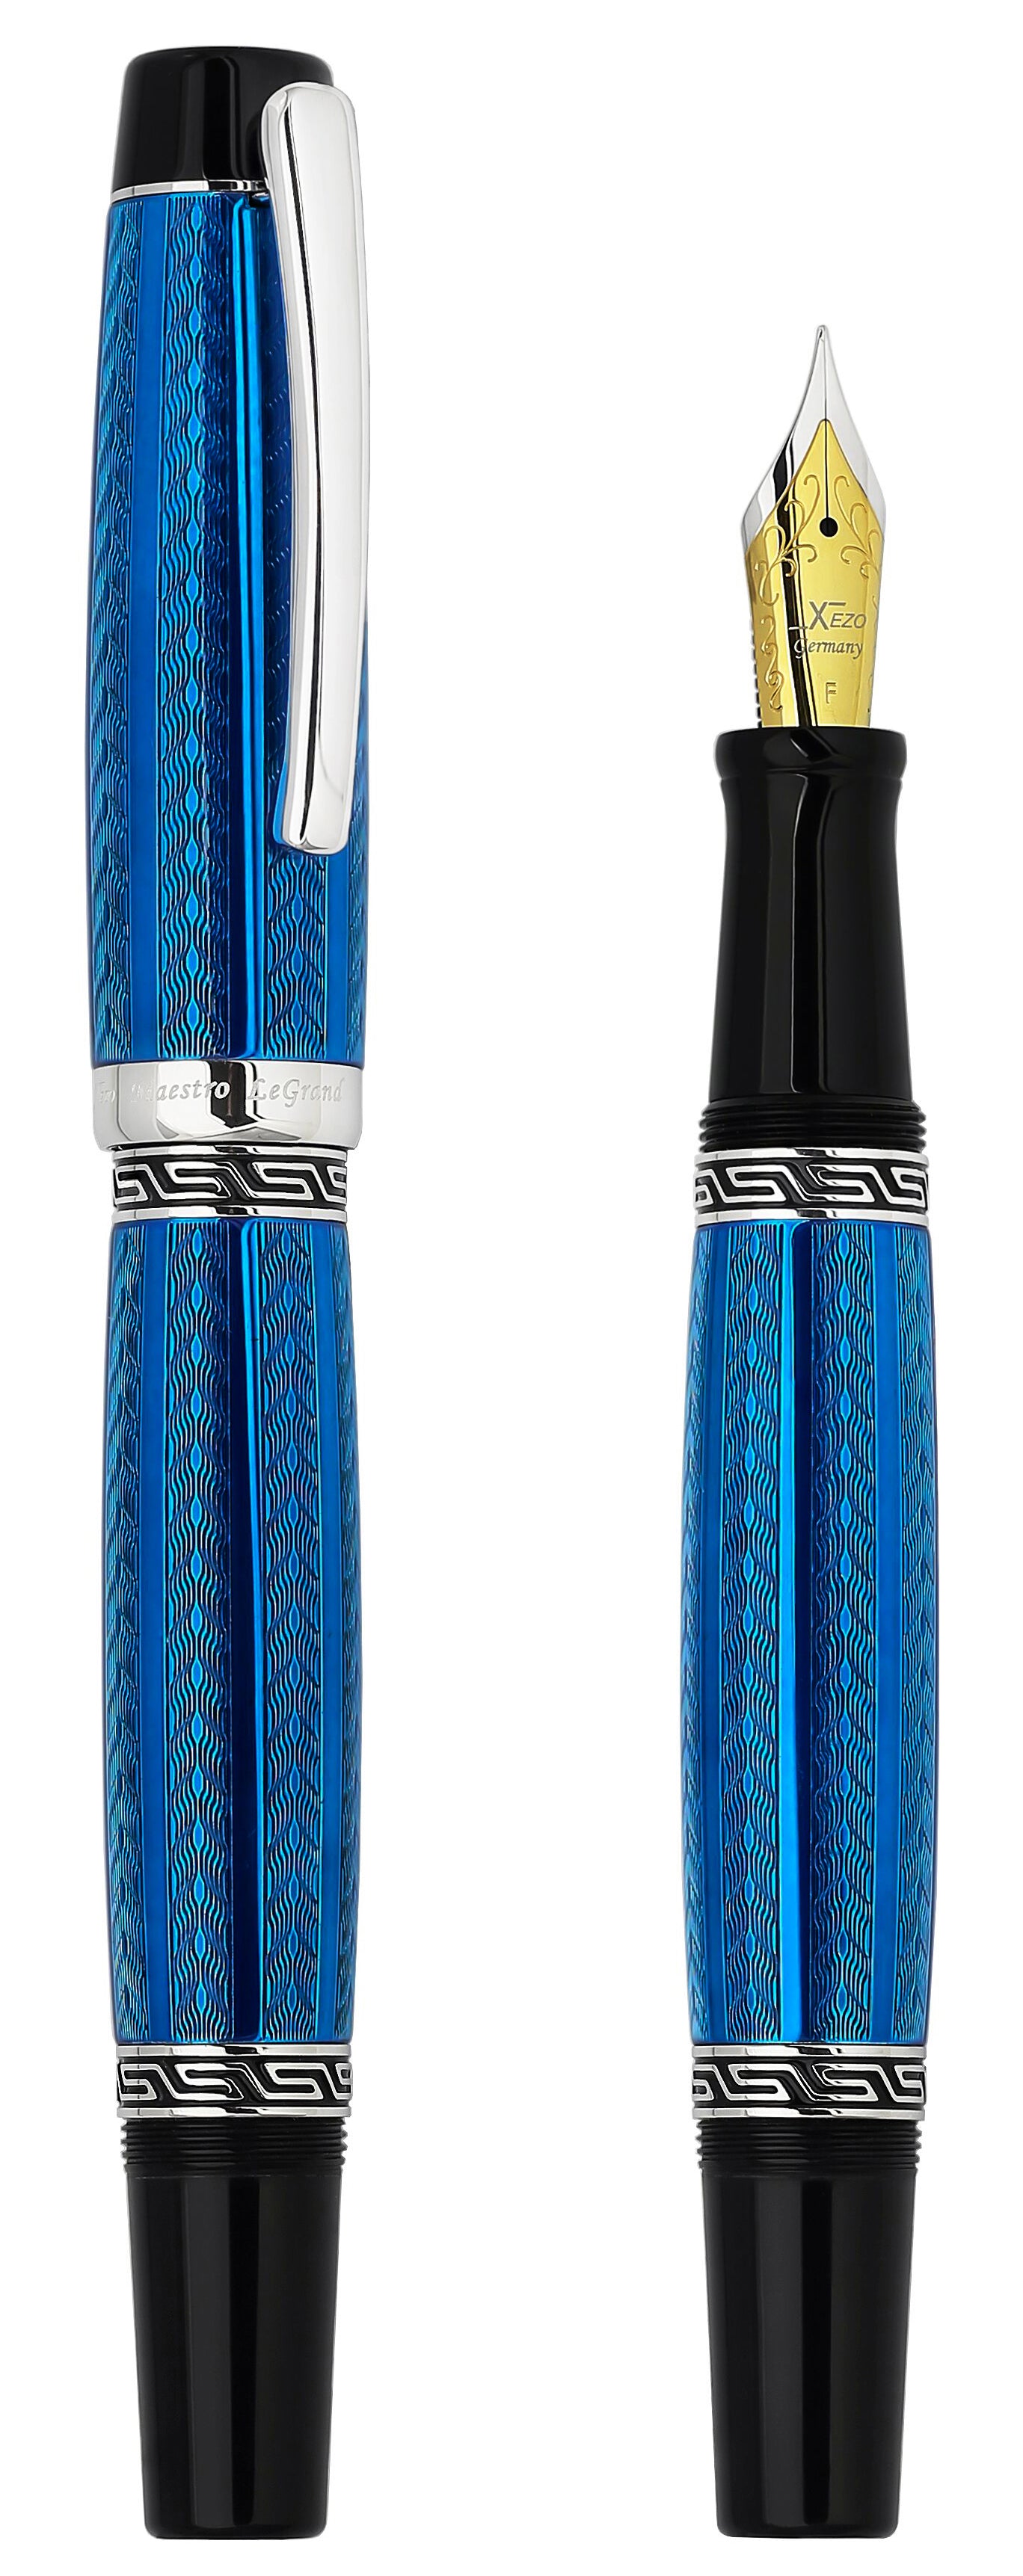 Xezo – Comparison between 3/4 view of the capped and uncapped Maestro LeGrand Tanzanite  F fountain pens